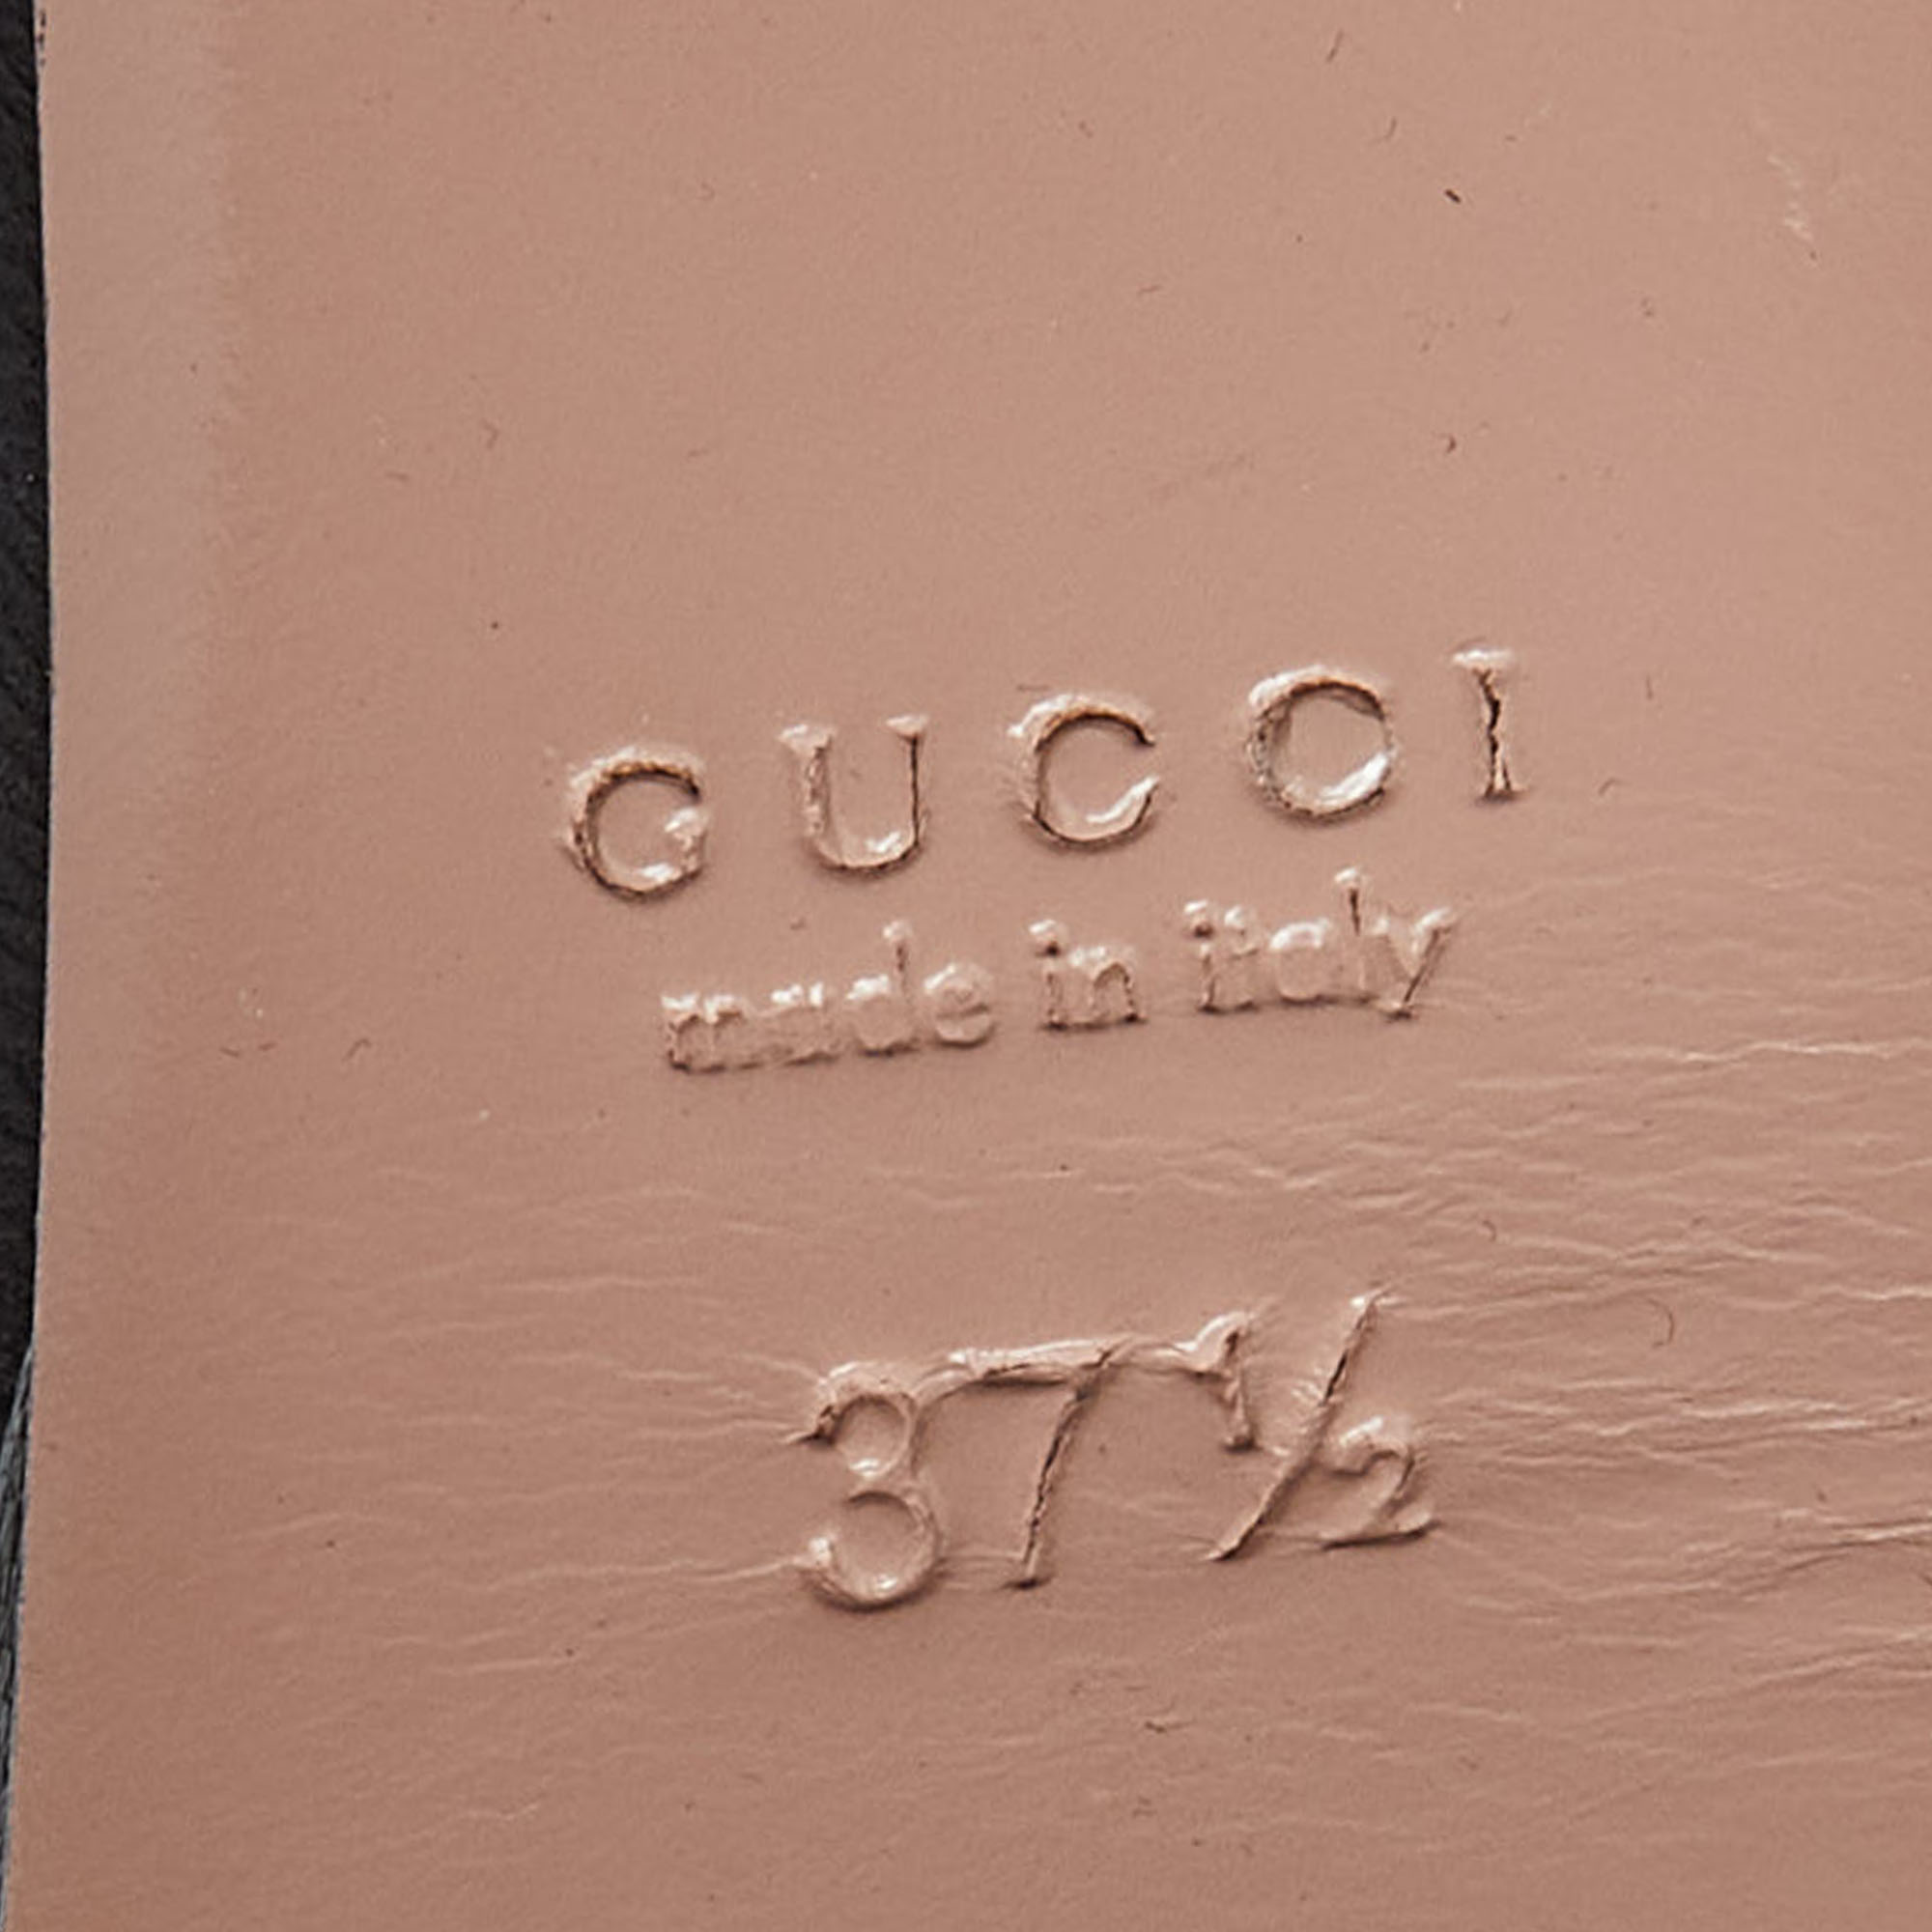 Gucci Black Leather Peep Toe Platform Pumps Size 37.5